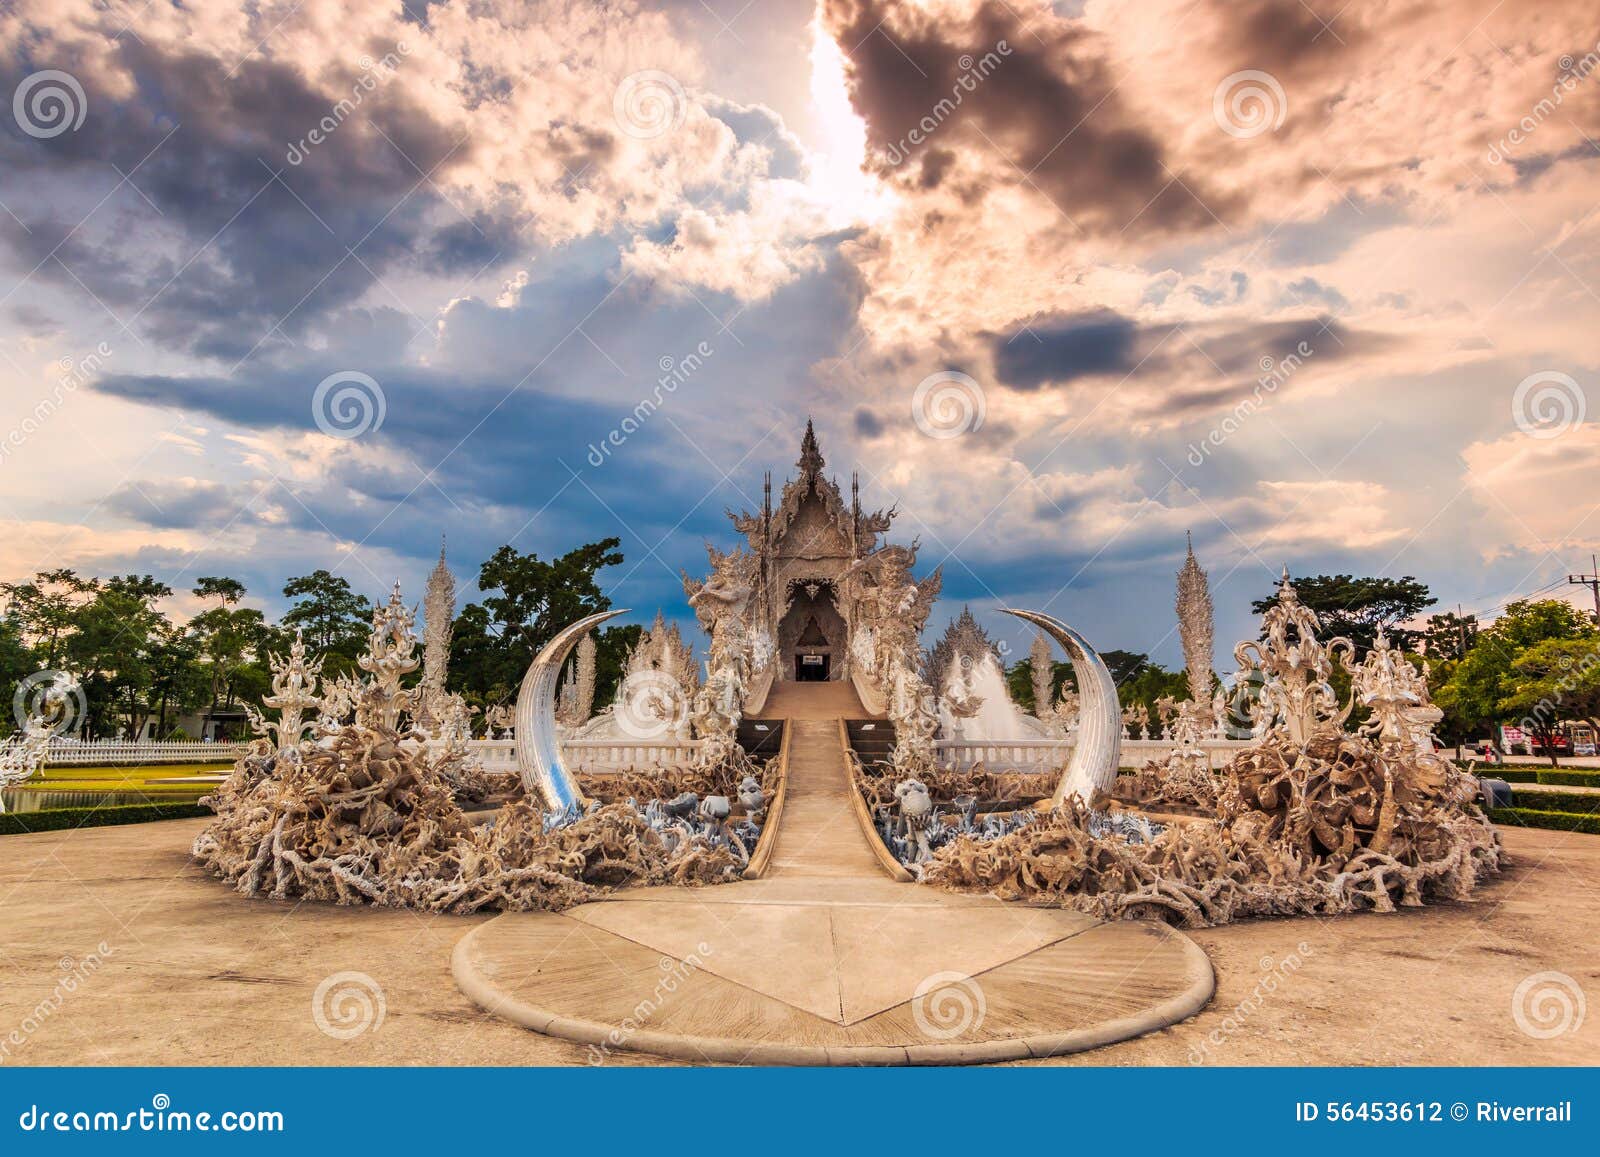 wat rong khun chiangrai province thailand where place worship 56453612